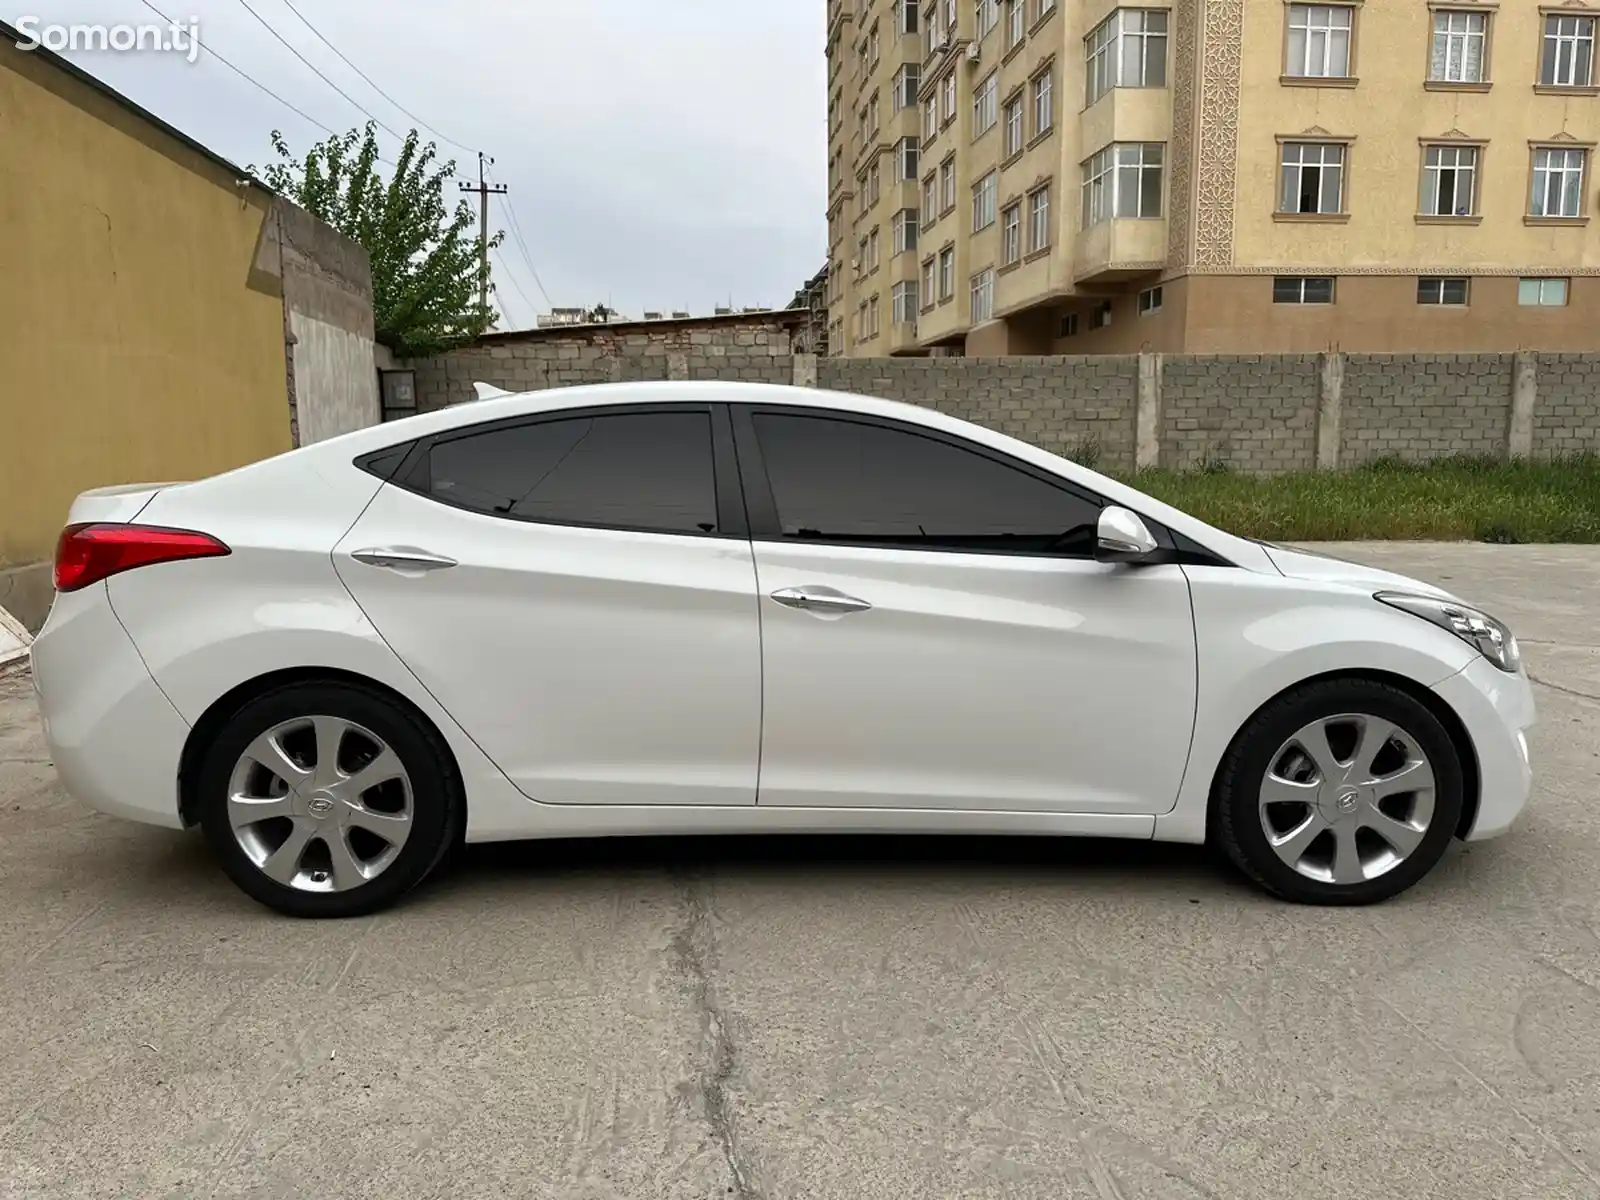 Hyundai Avante, 2011-7